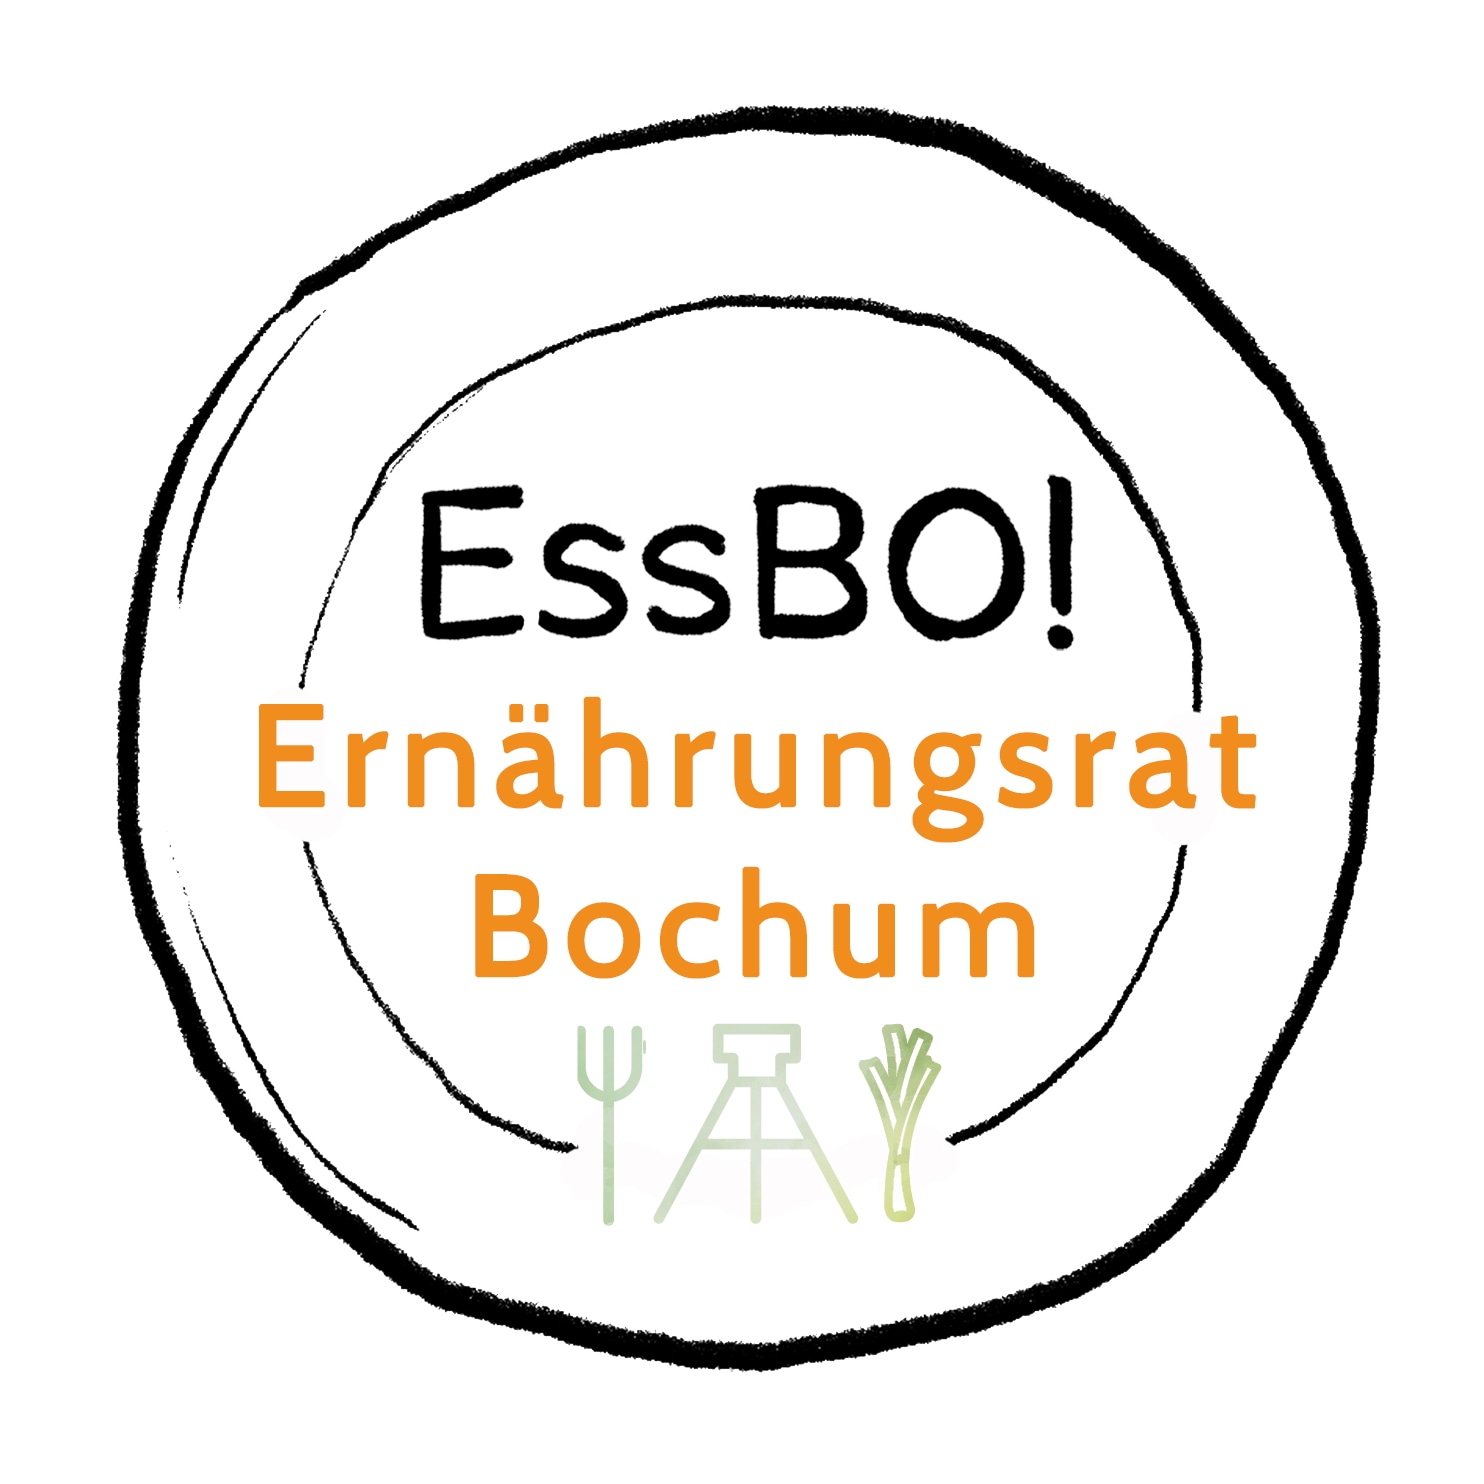 EssBO! Ernährungsrat Bochum